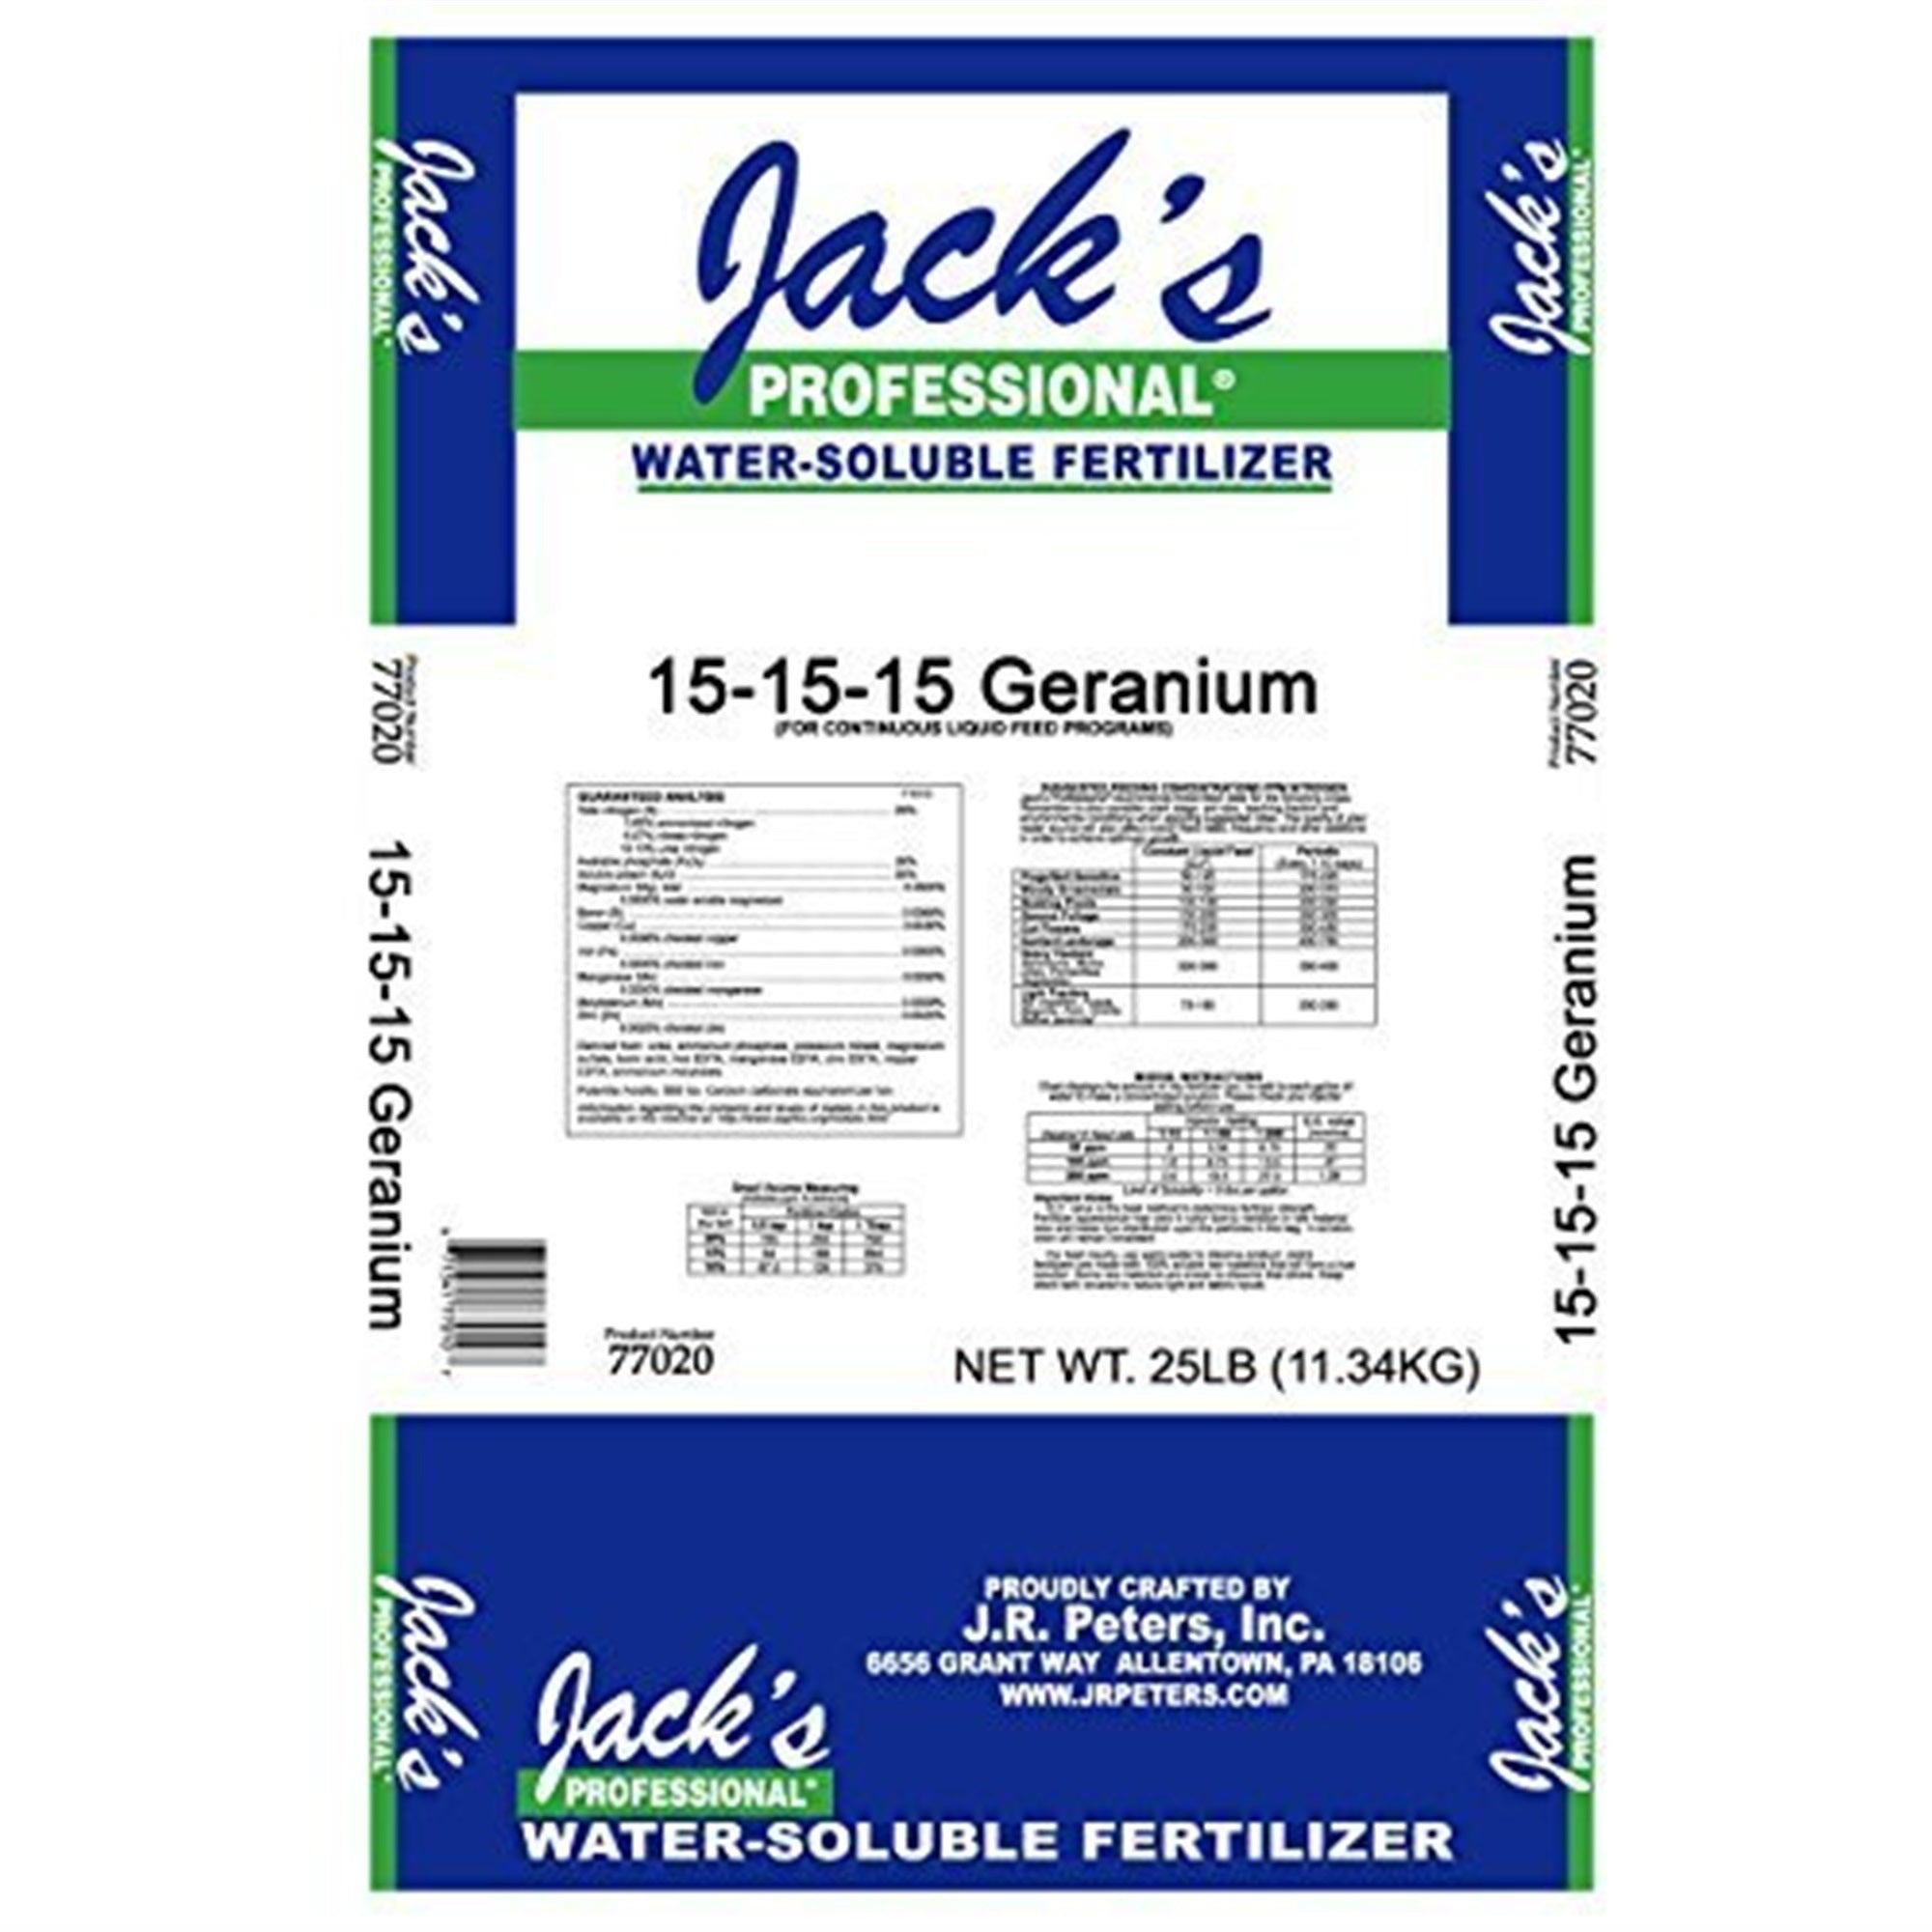 JR Peter's Jack's Professional Geranium 15-15-15 Fertilizer, 25 lb